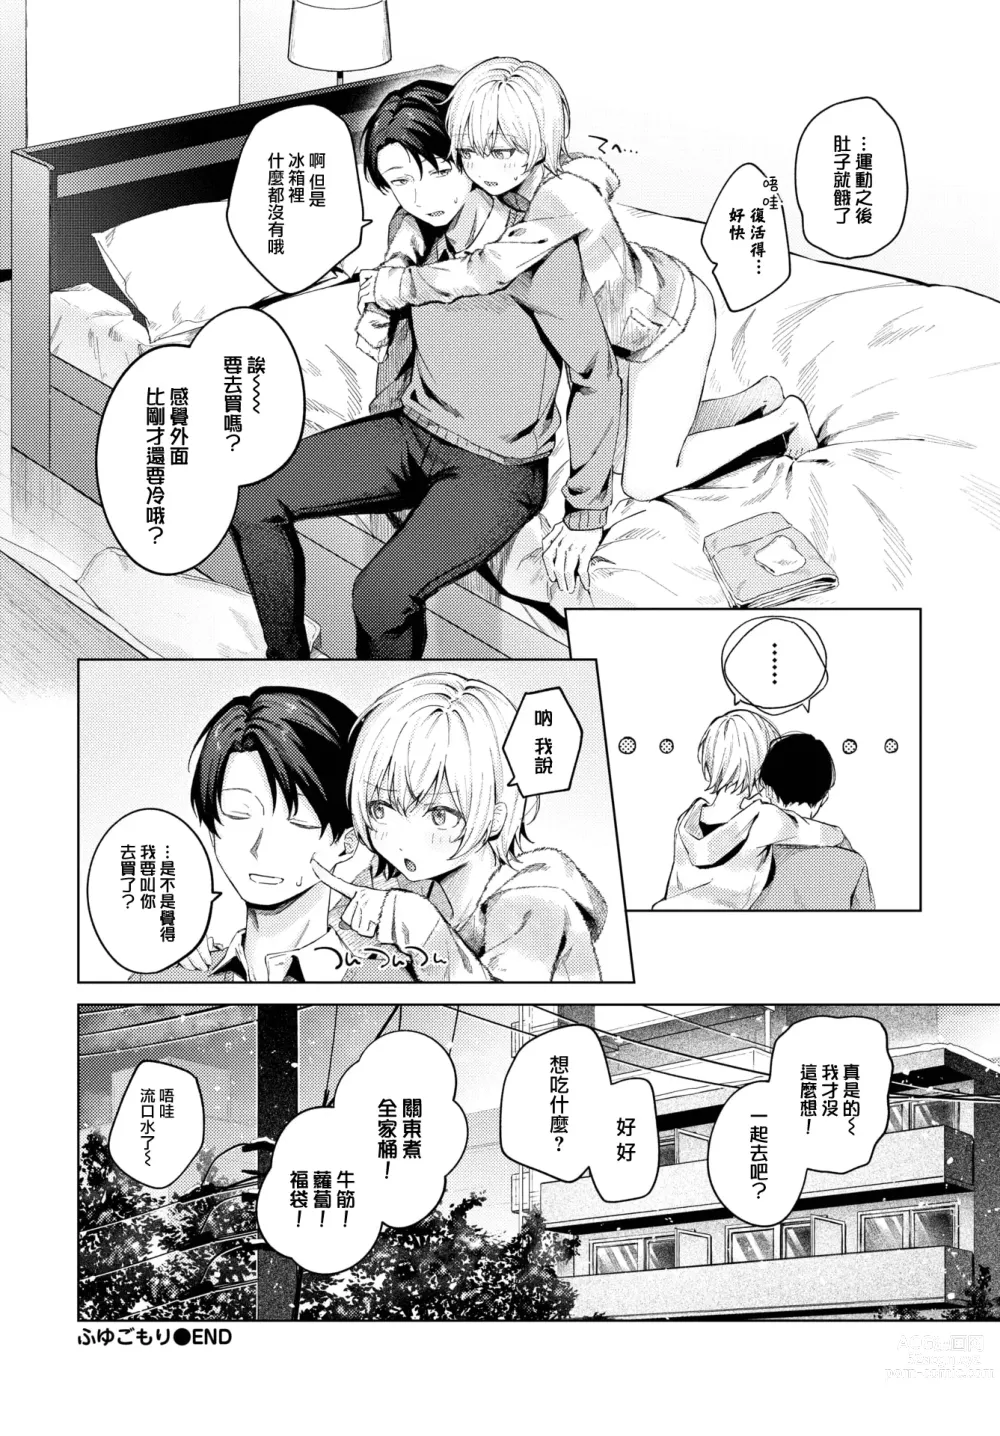 Page 23 of manga Fuyugomori